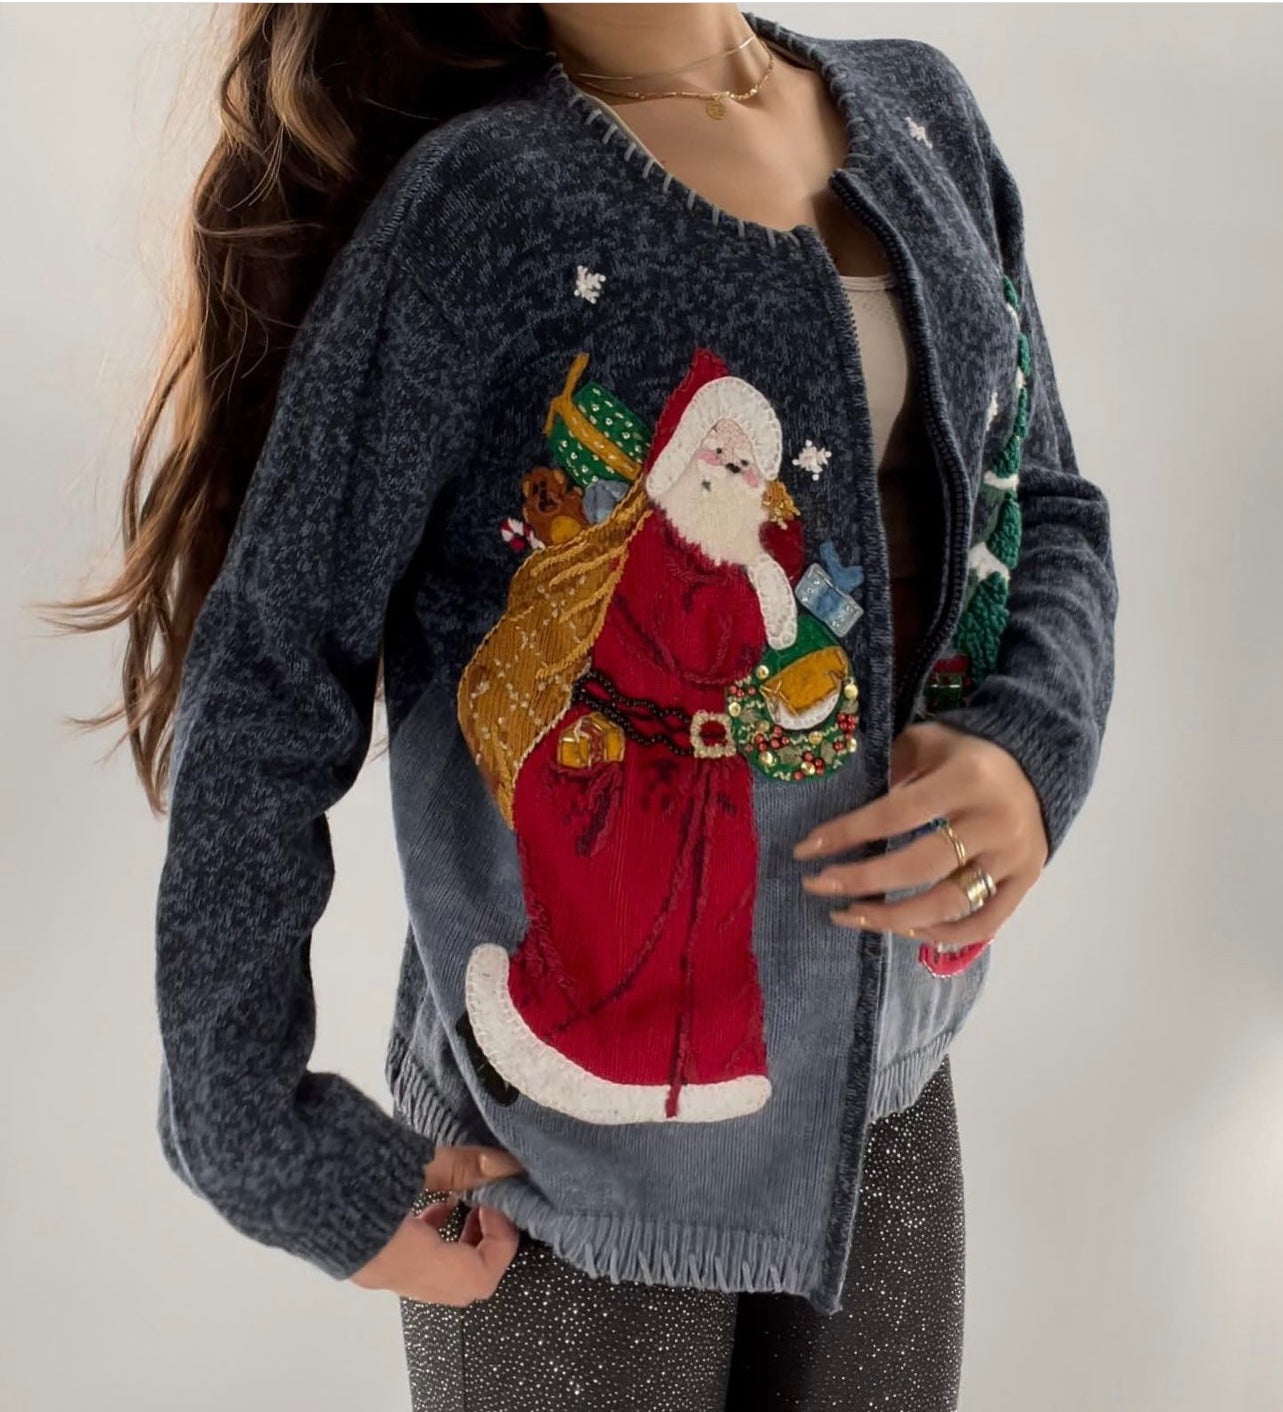 Urban Outfitters Santa Baby Holiday Cardigan (Medium)